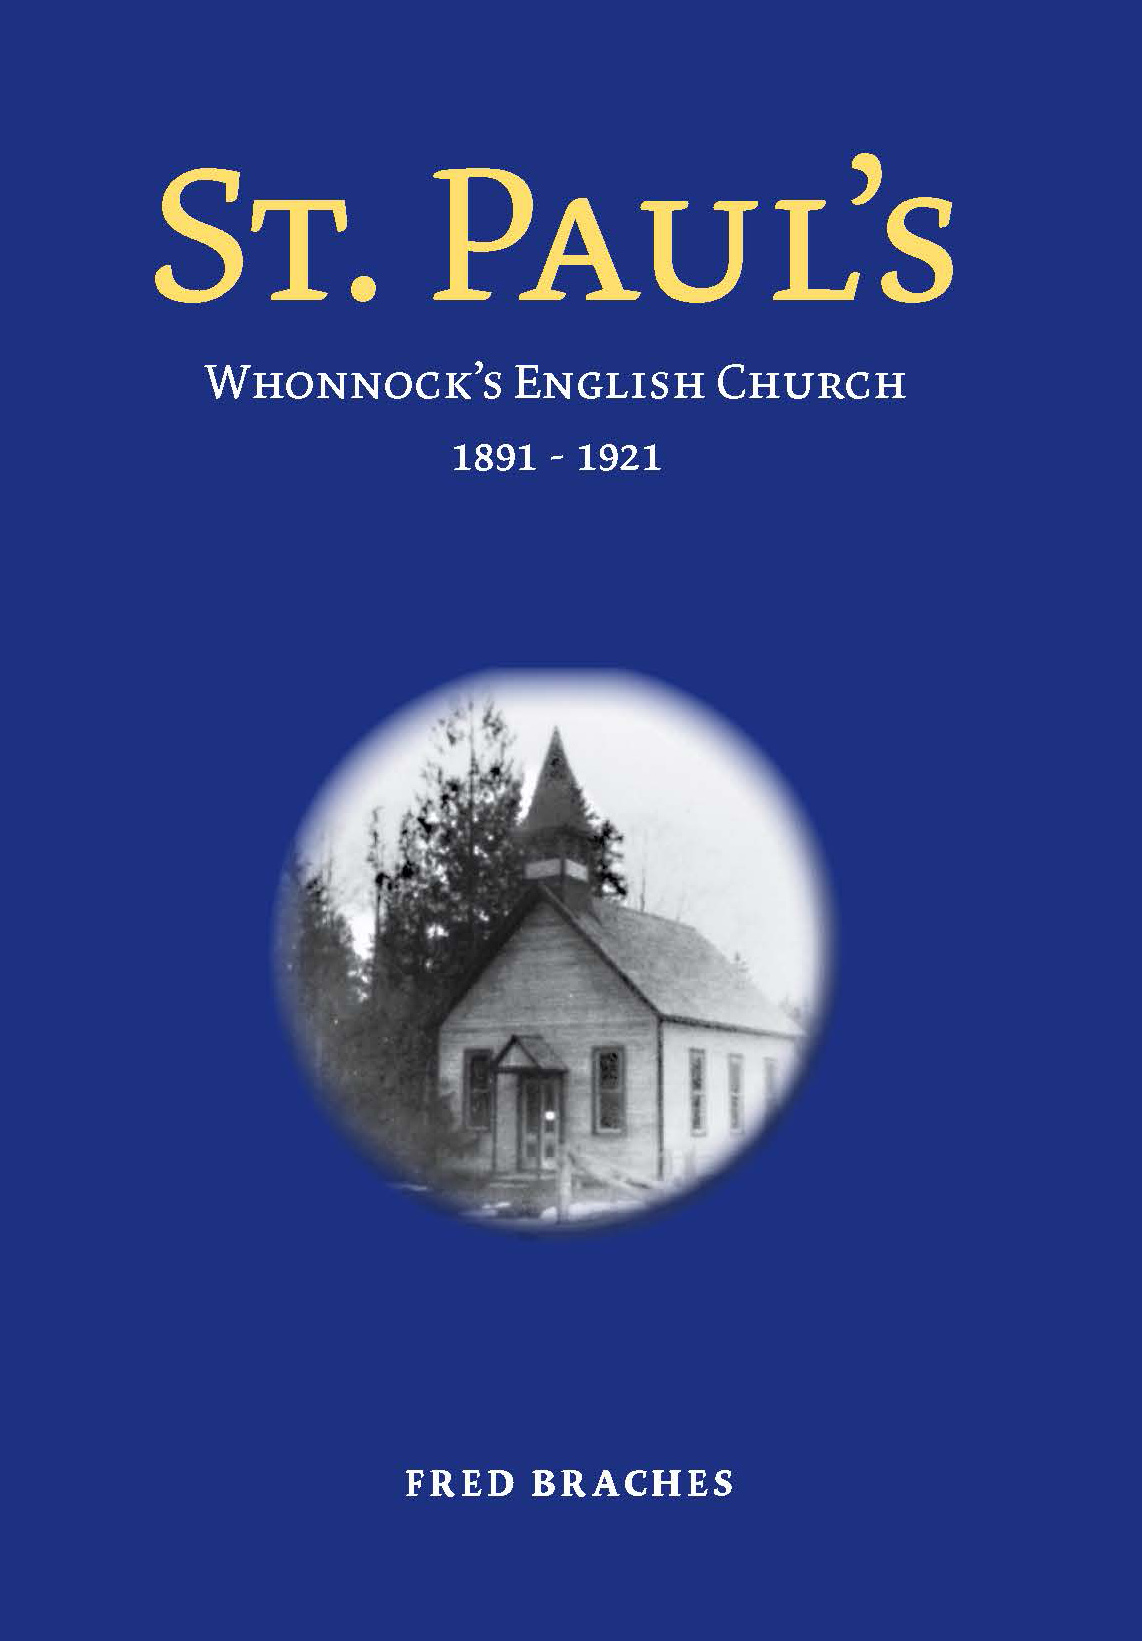 St. Paul's: Whonnock's English Church 1891 - 1921